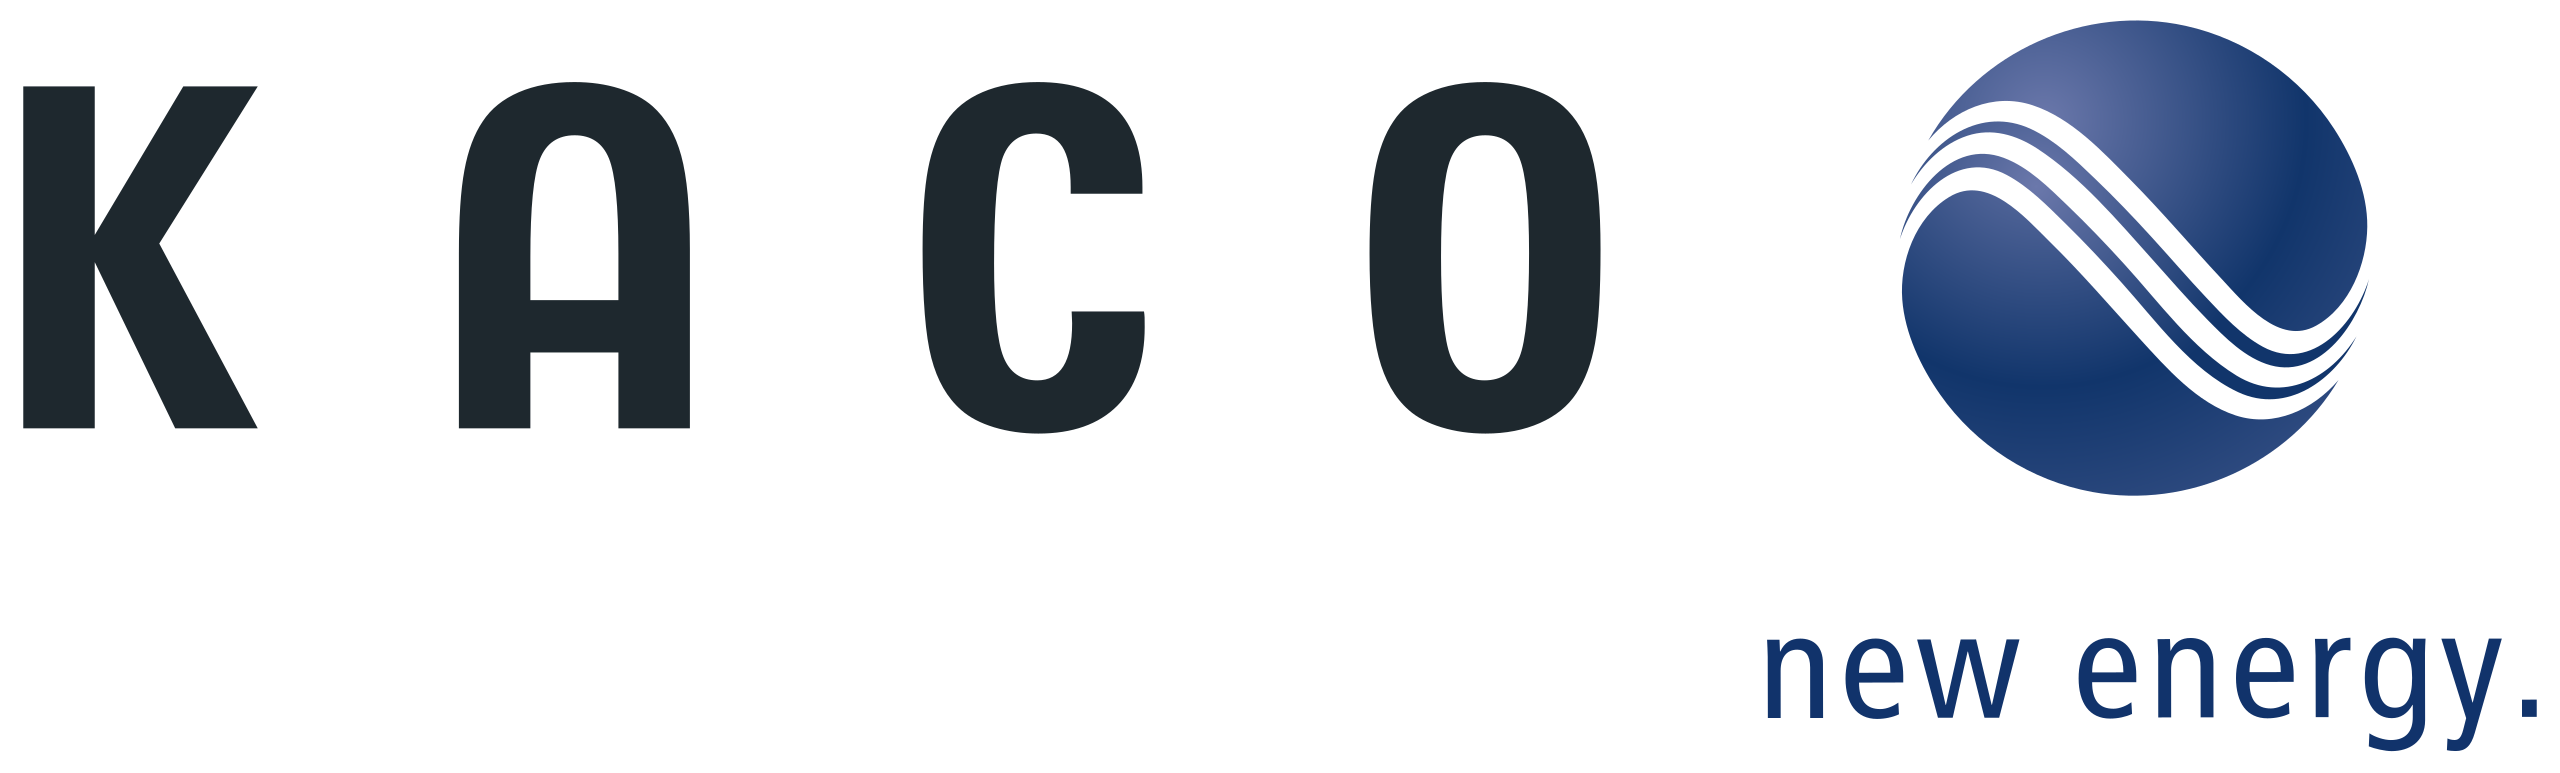 2560px-KACO_new_energy_logo.svg